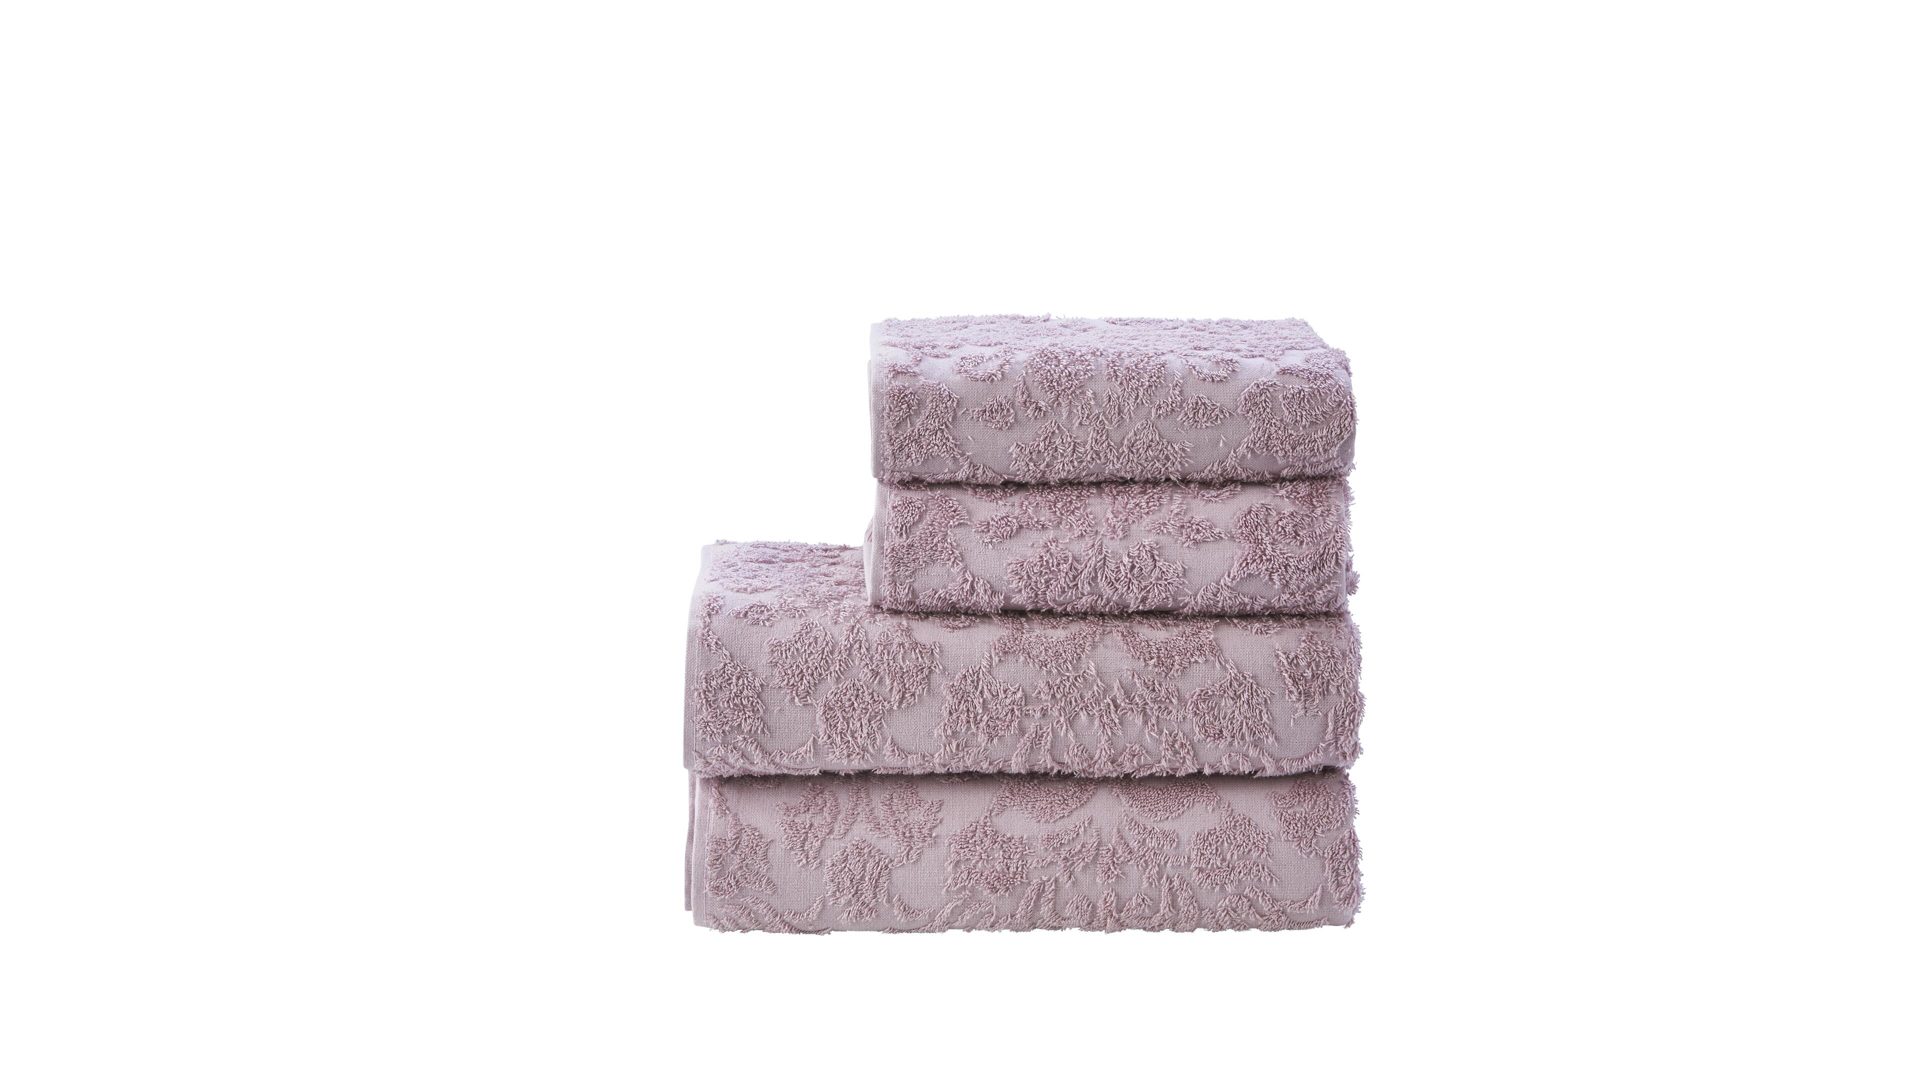 Handtuch-Set Done® by karabel home company aus Stoff in Pastellfarben done Handtuch-Set Provence Ornaments altrosafarbene Baumwolle  – vierteilig